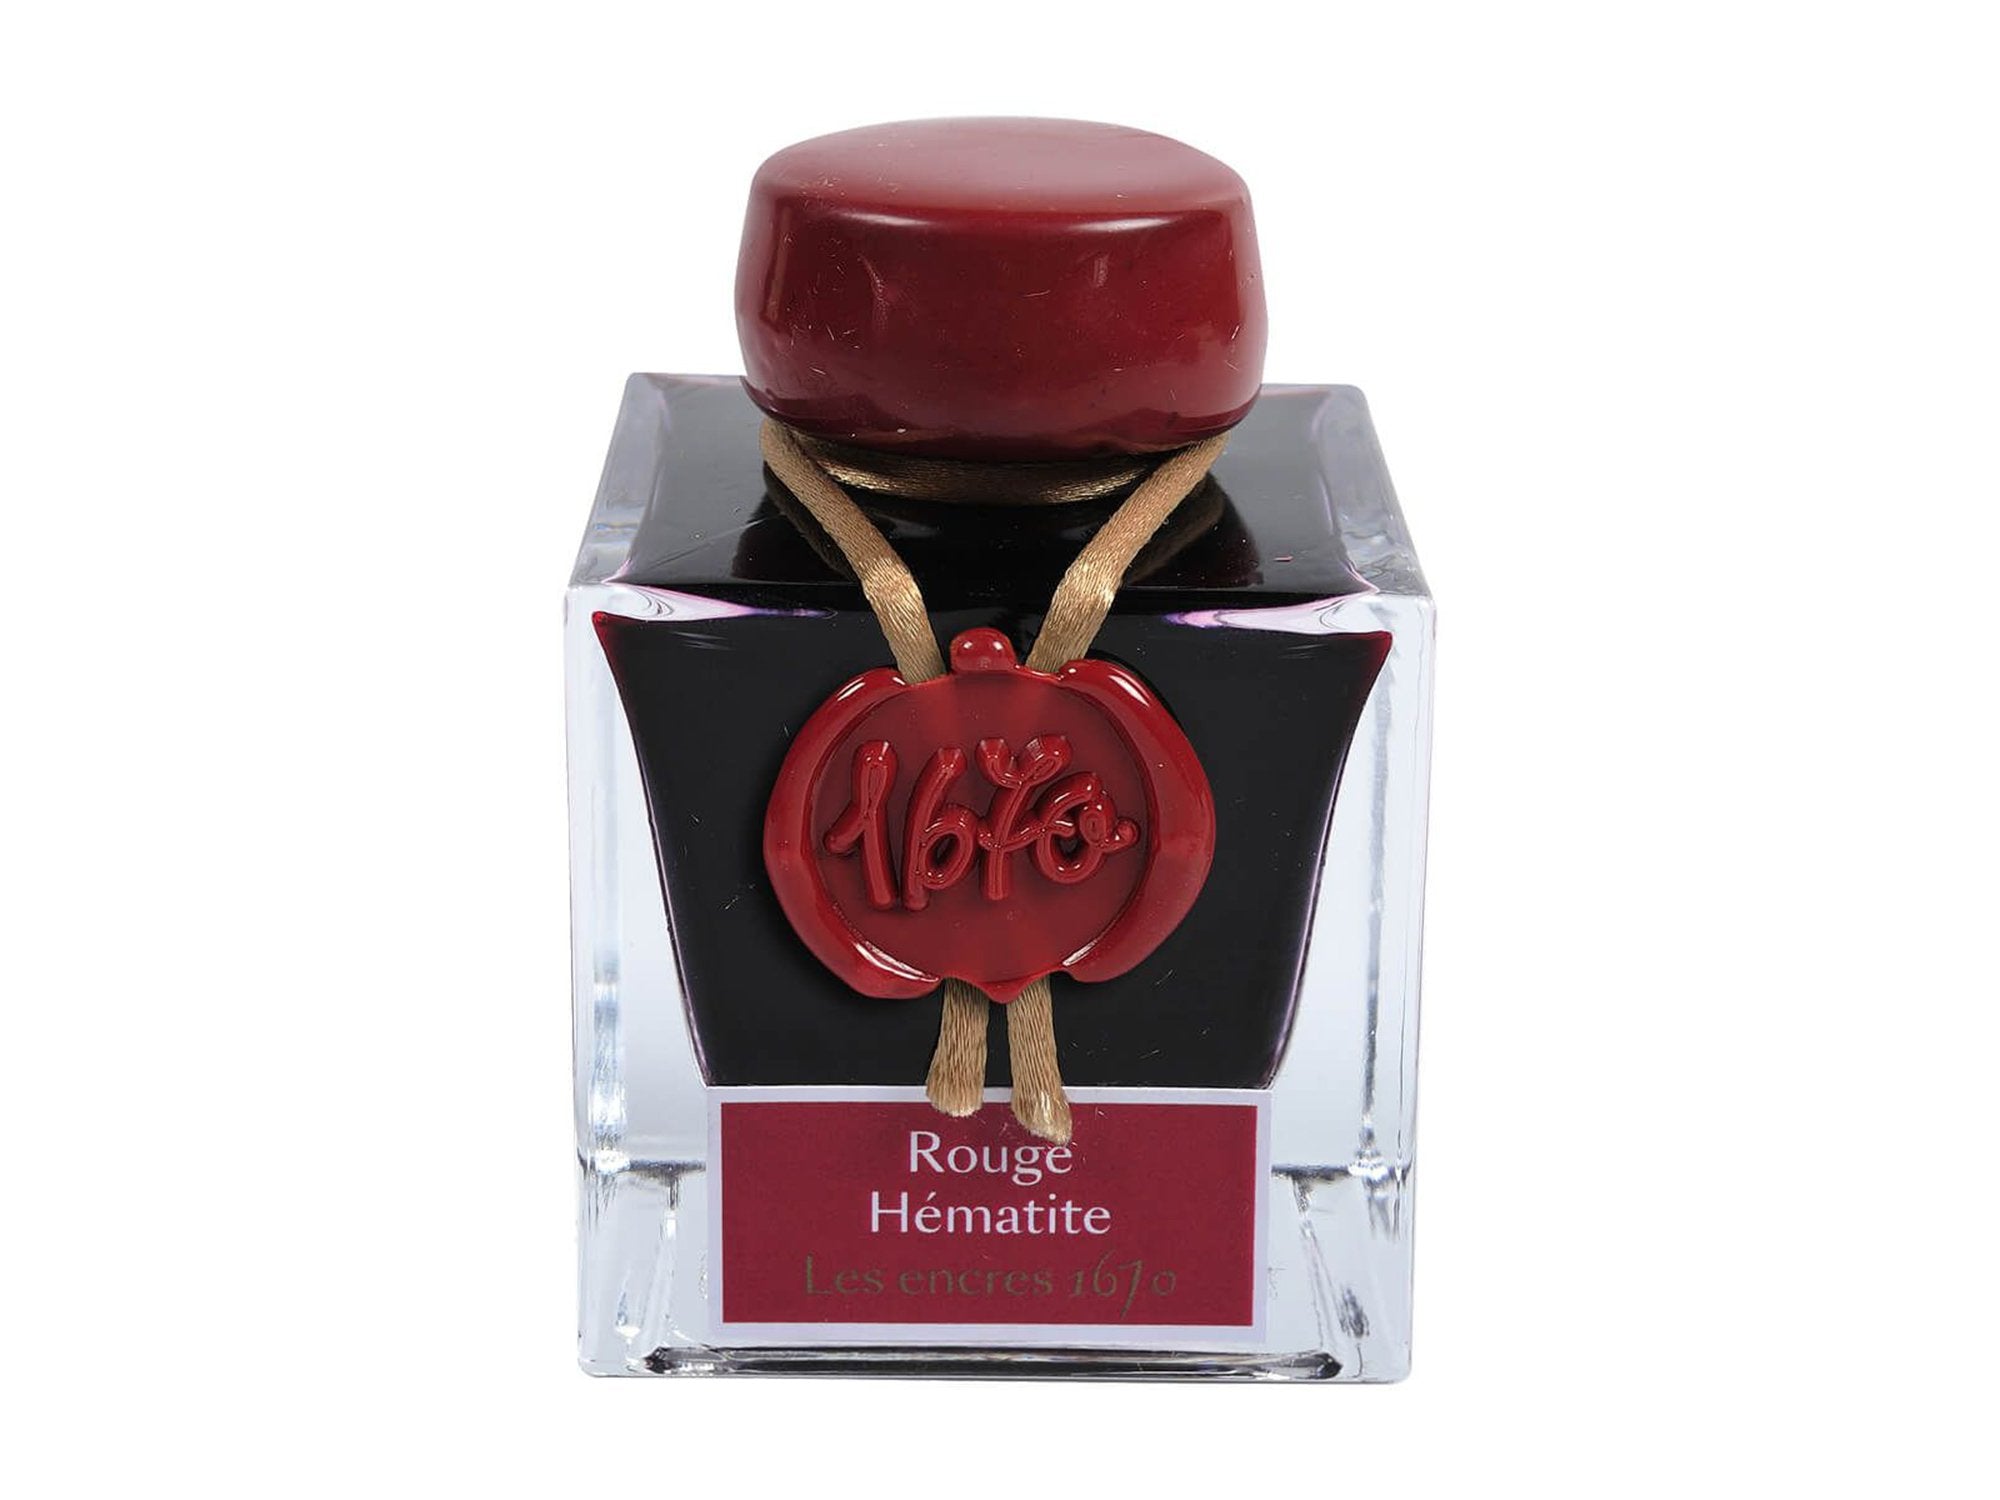 Jacques Herbin 1670 Rouge Hematite Ink Bottle – Truphae